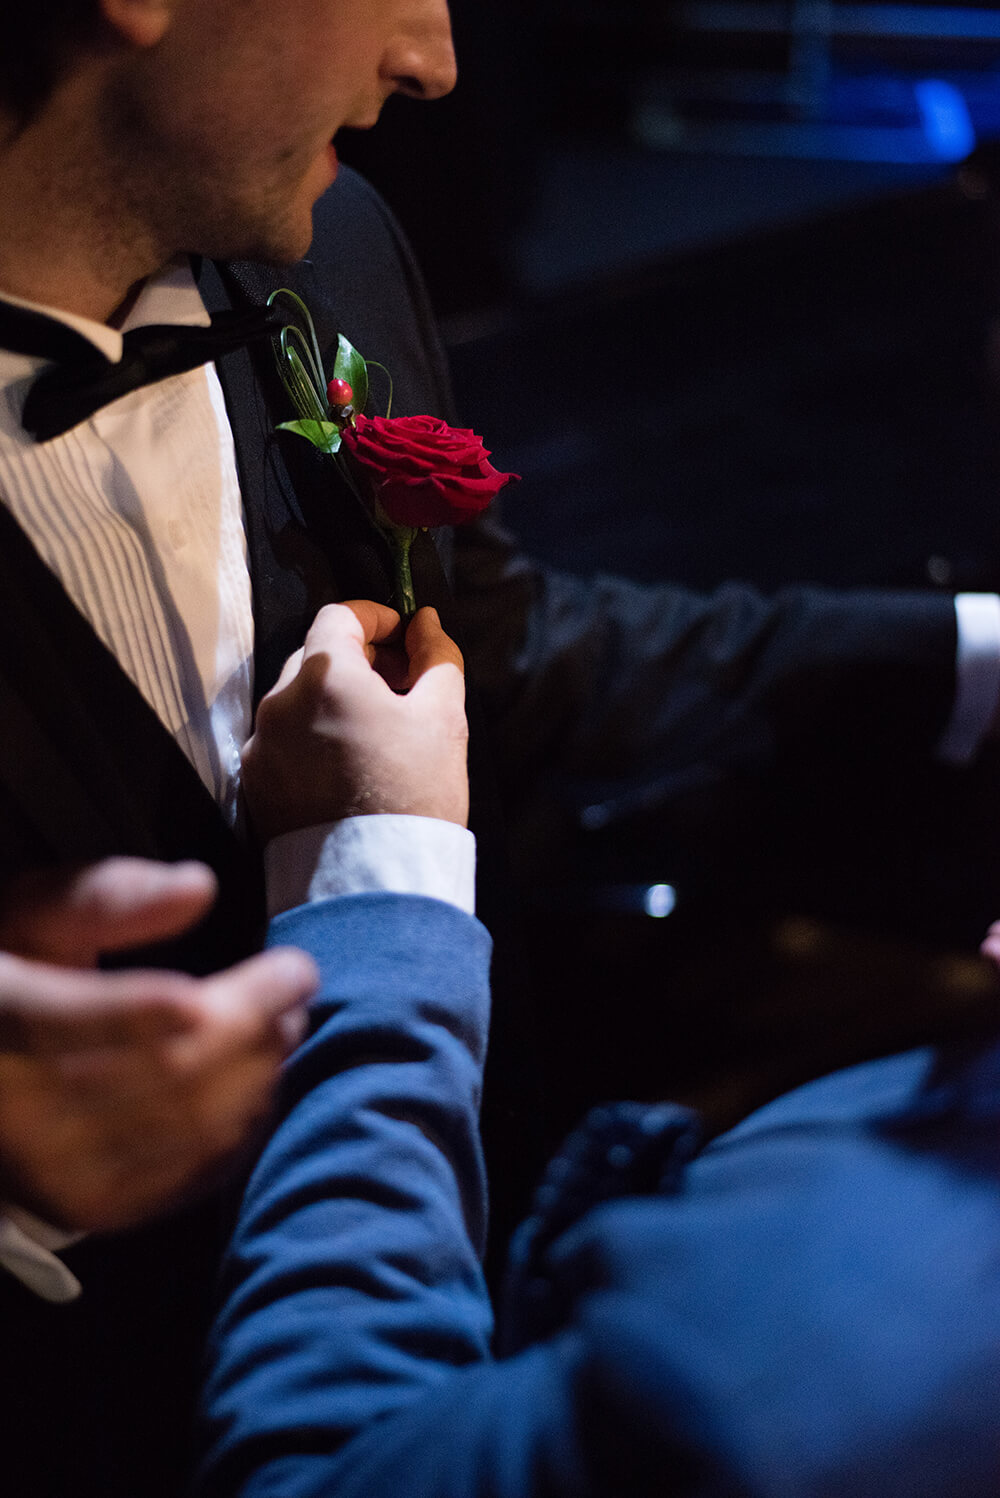 Bridebook.co.uk rose boutonniere on groom's tuxedo